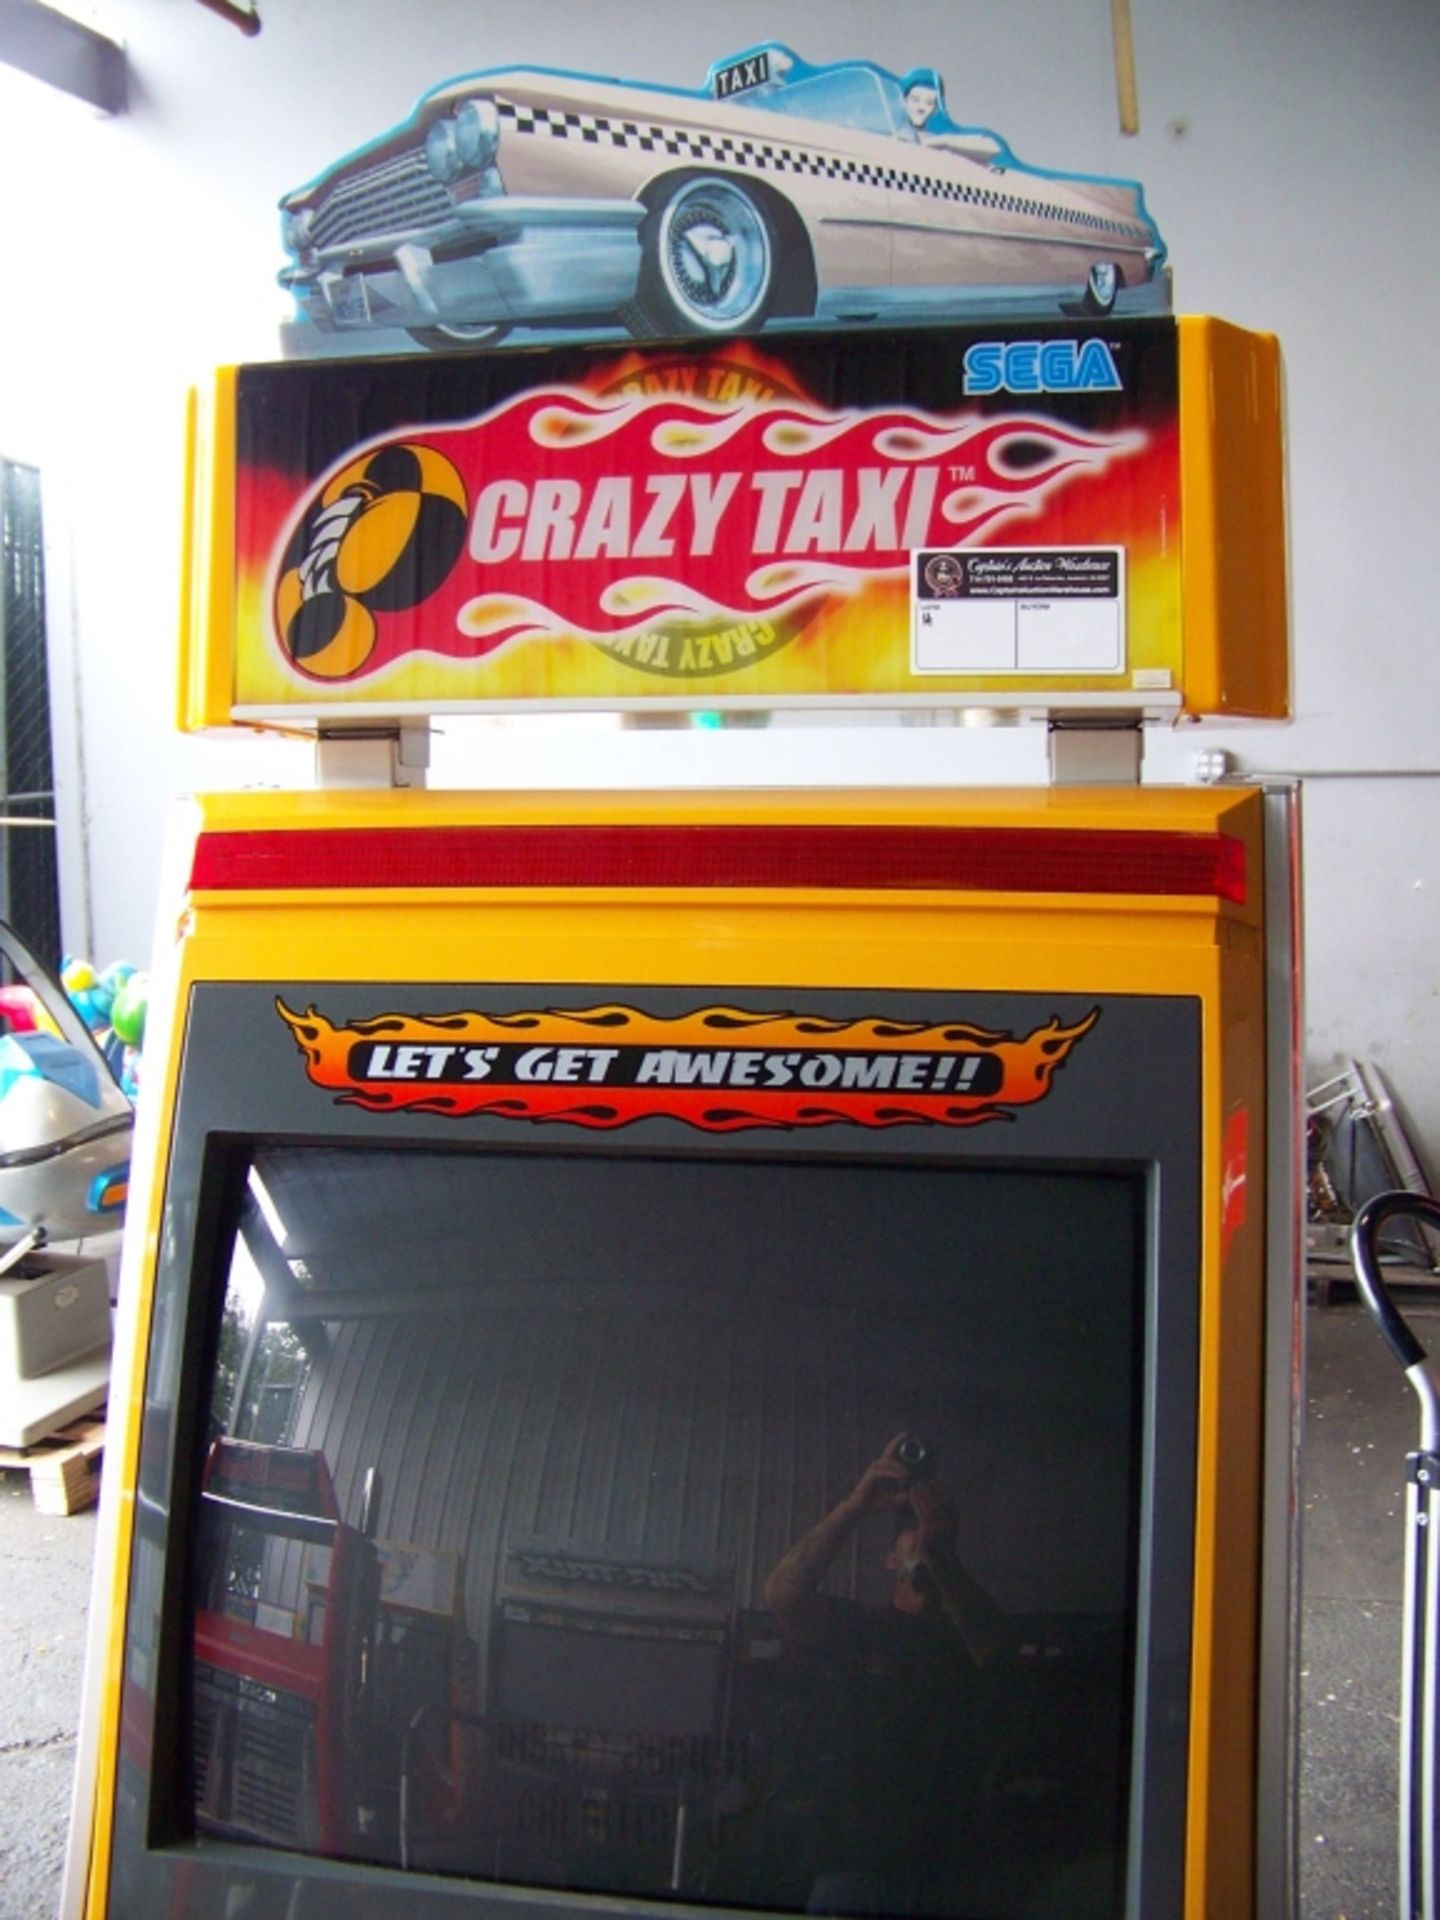 CRAZY TAXI UPRIGHT DRIVER ARCADE GAME SEGA NAOMI - Image 2 of 4